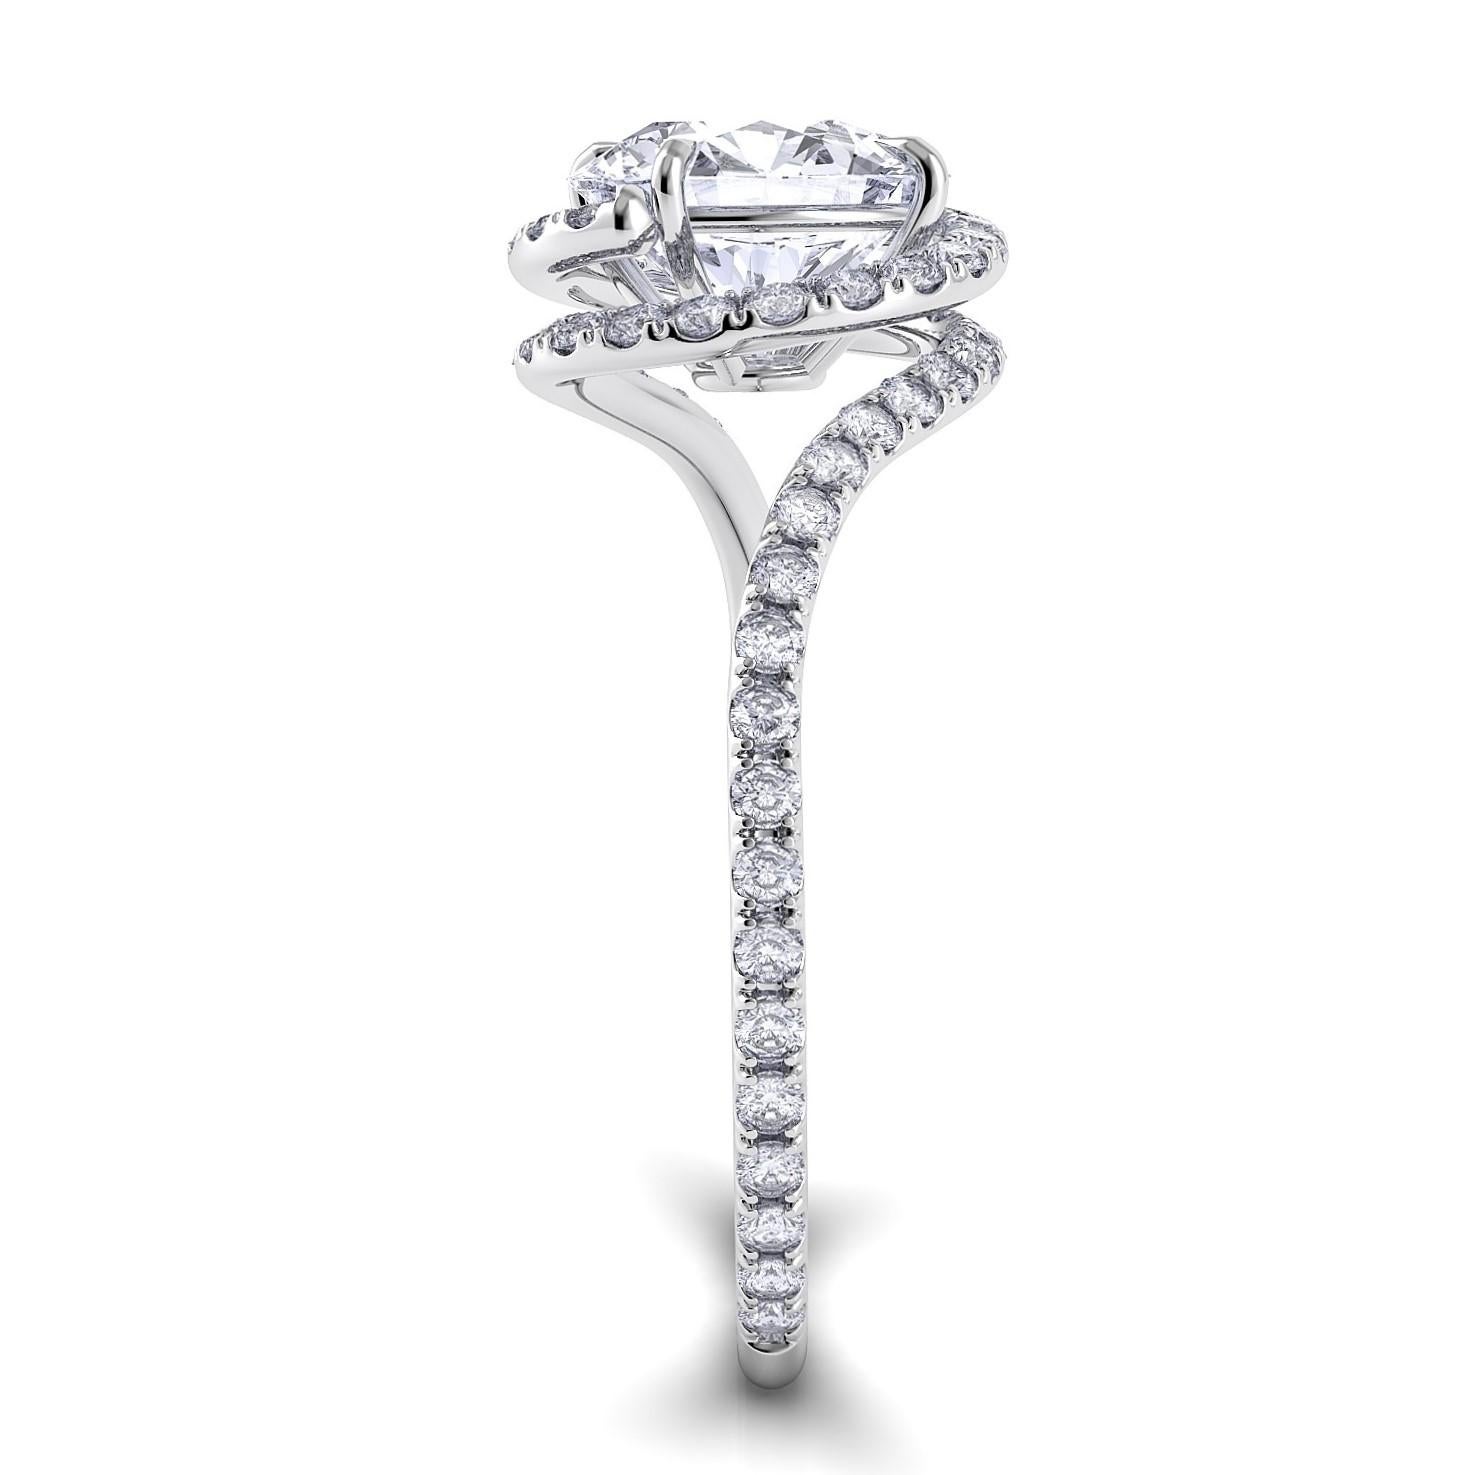 Danhov Abbraccio Award Winning Swirl Diamond Engagement Ring 'AE-100' For Sale 1